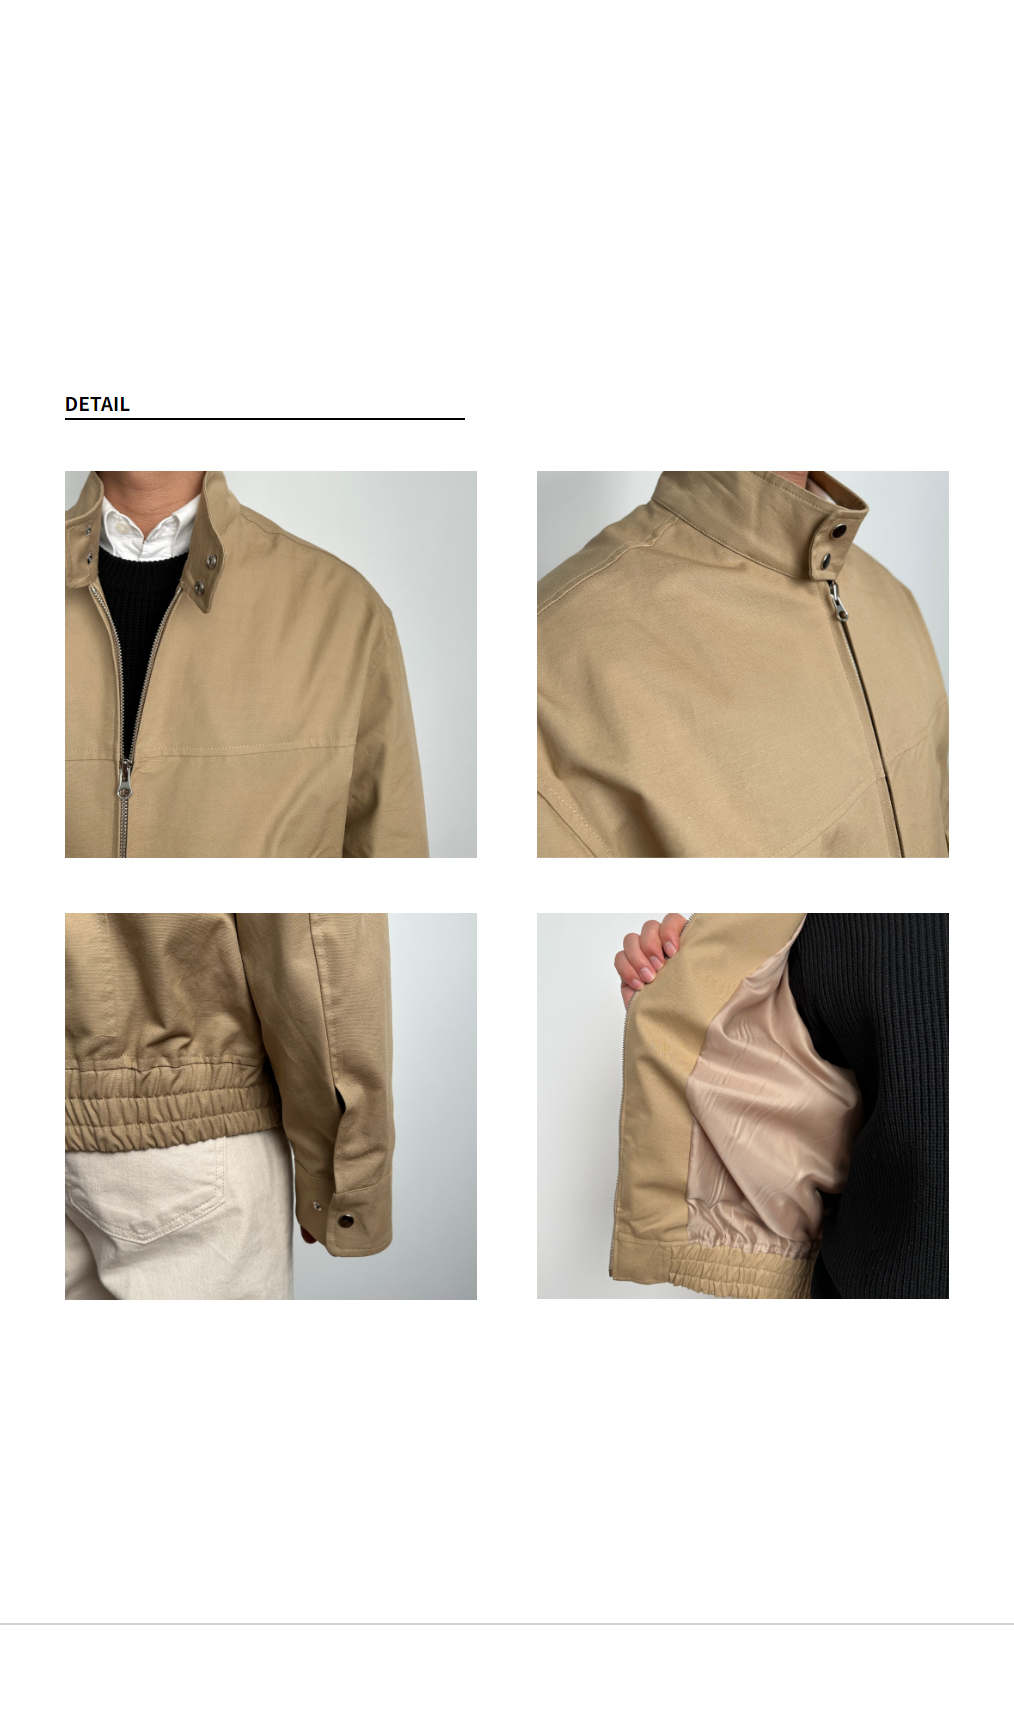 jacket detail image-S1L31